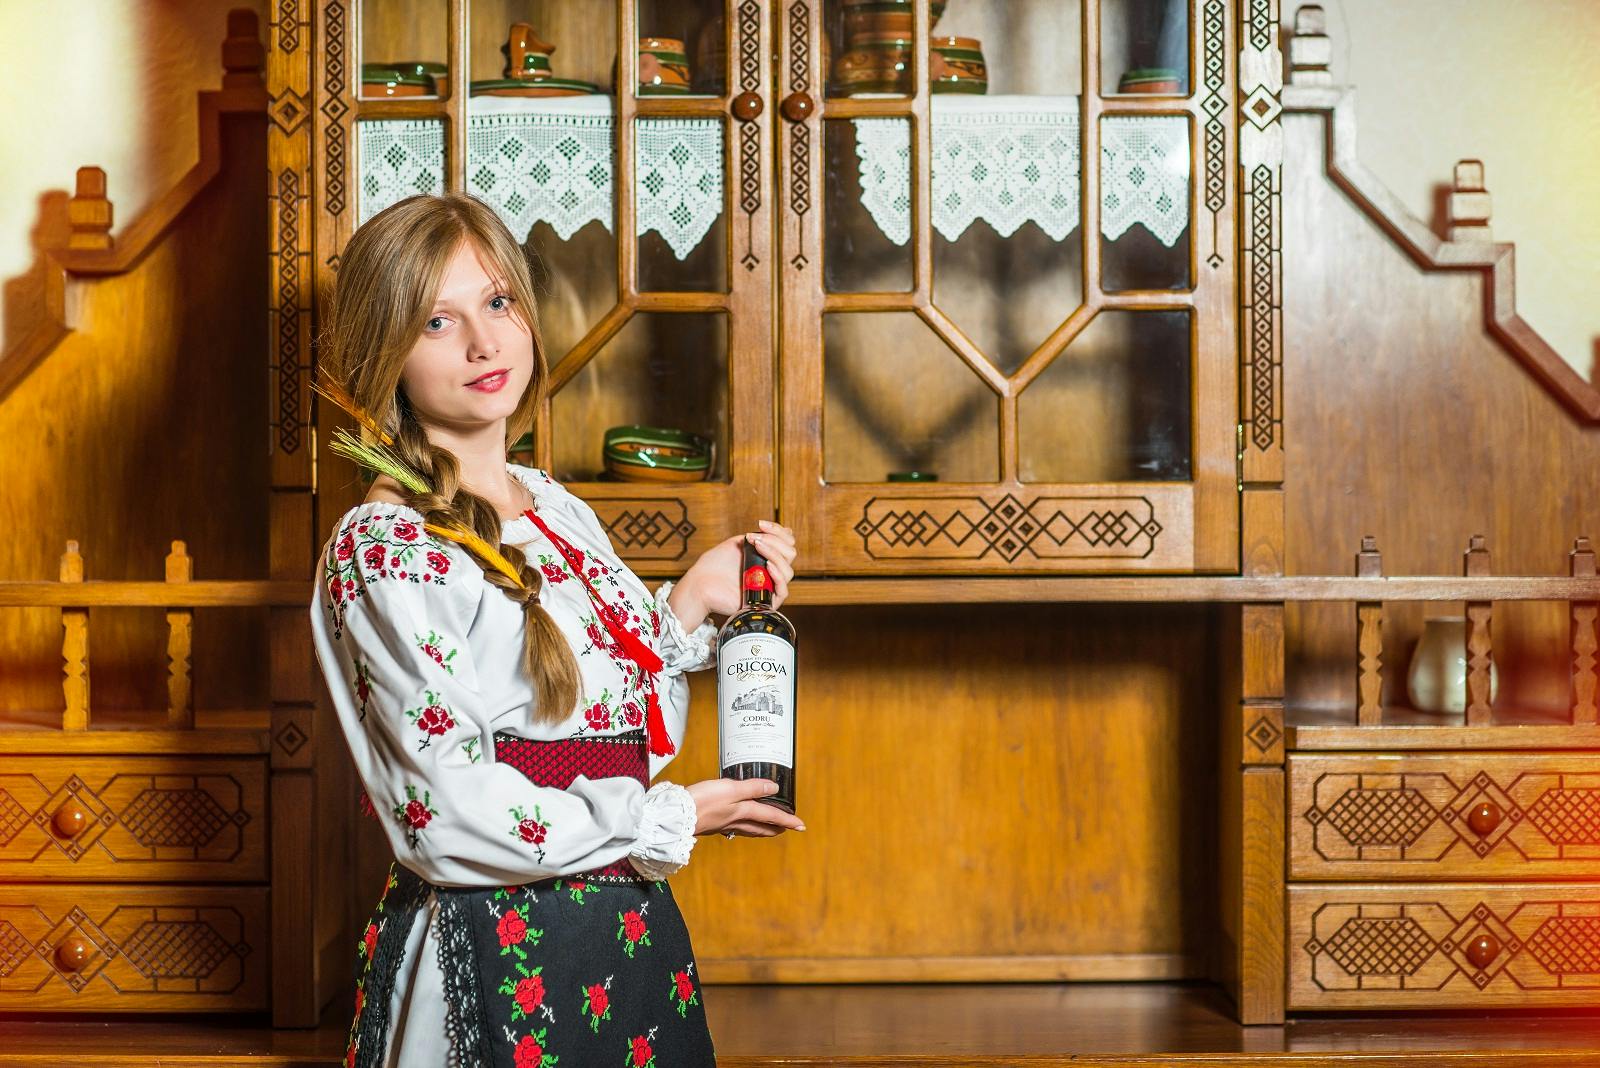 Cricova wine tour from Chisinau Musement